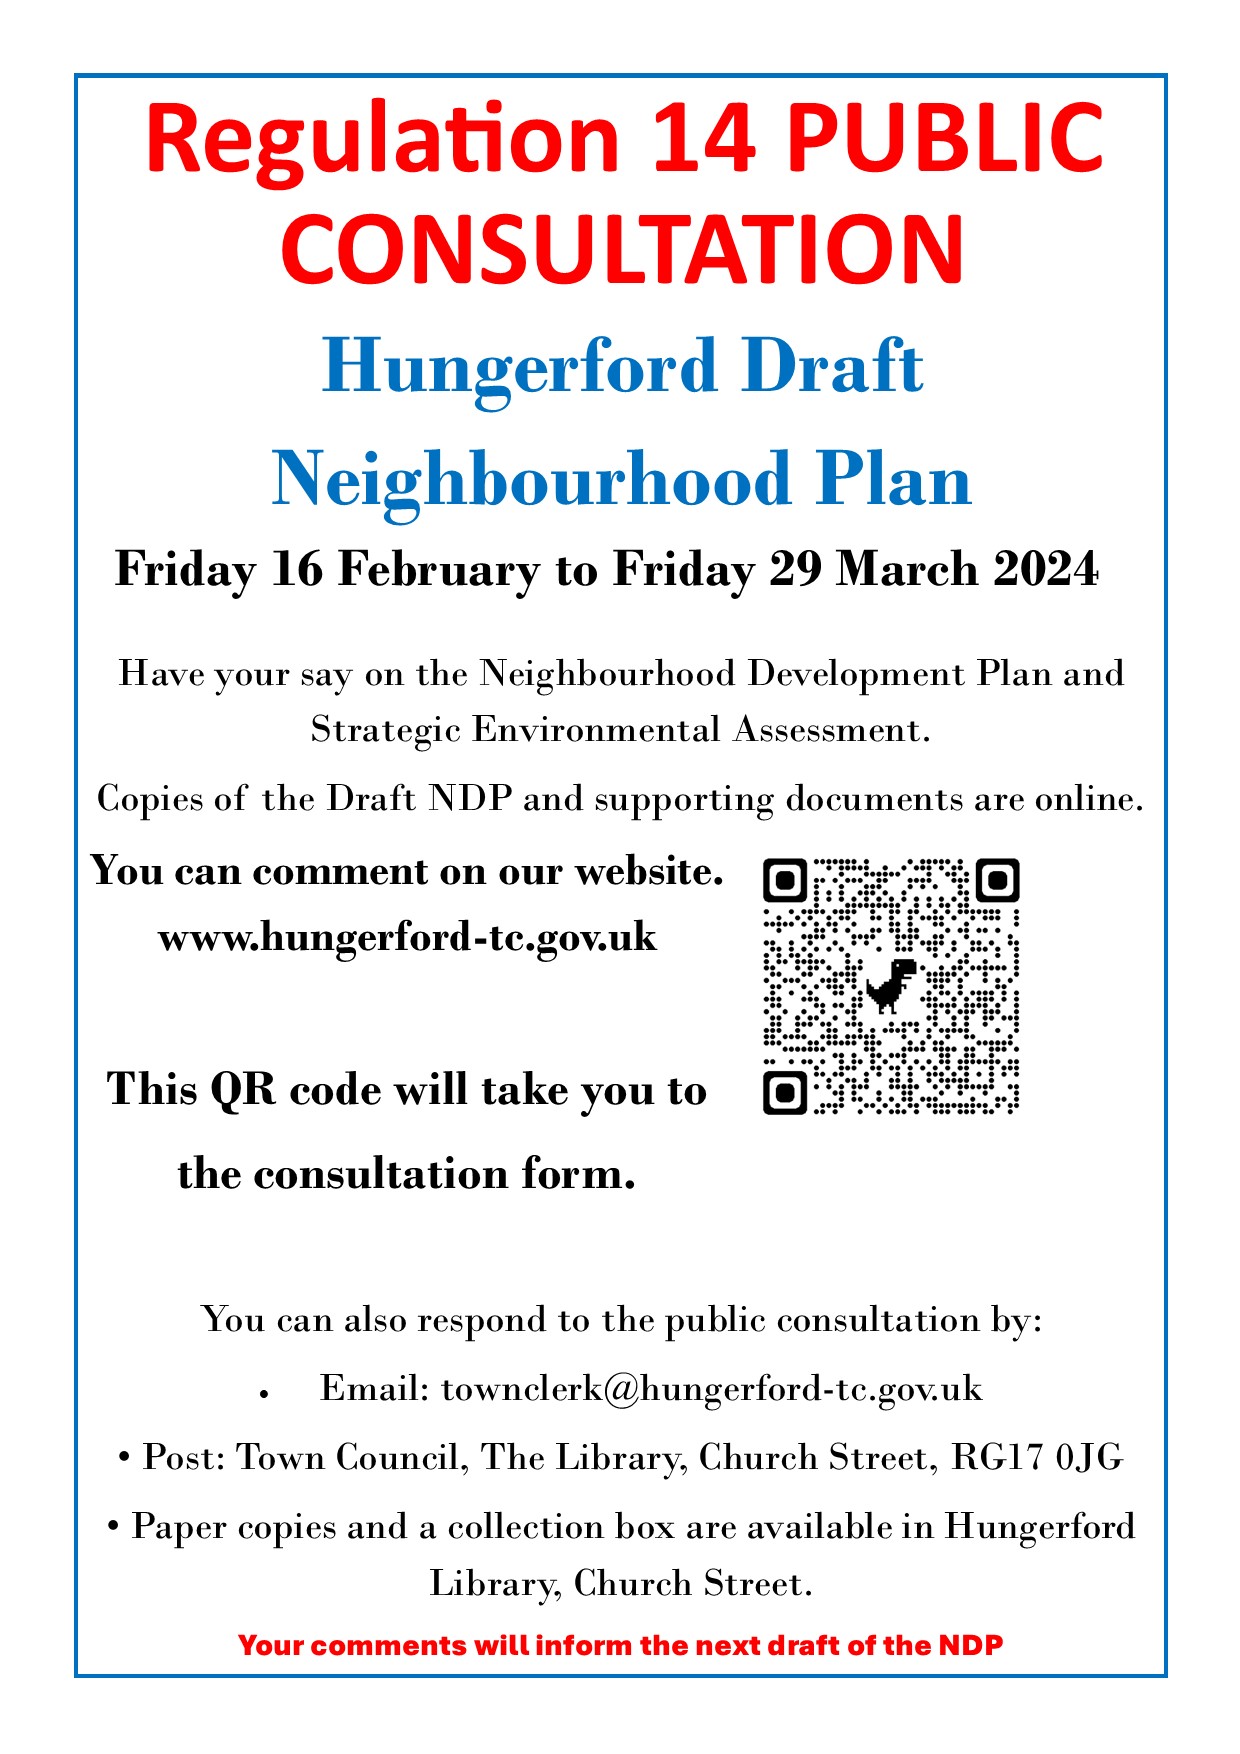 Advertising Regulation 14 Consultation on Hungerford's Neighbourhood Plan